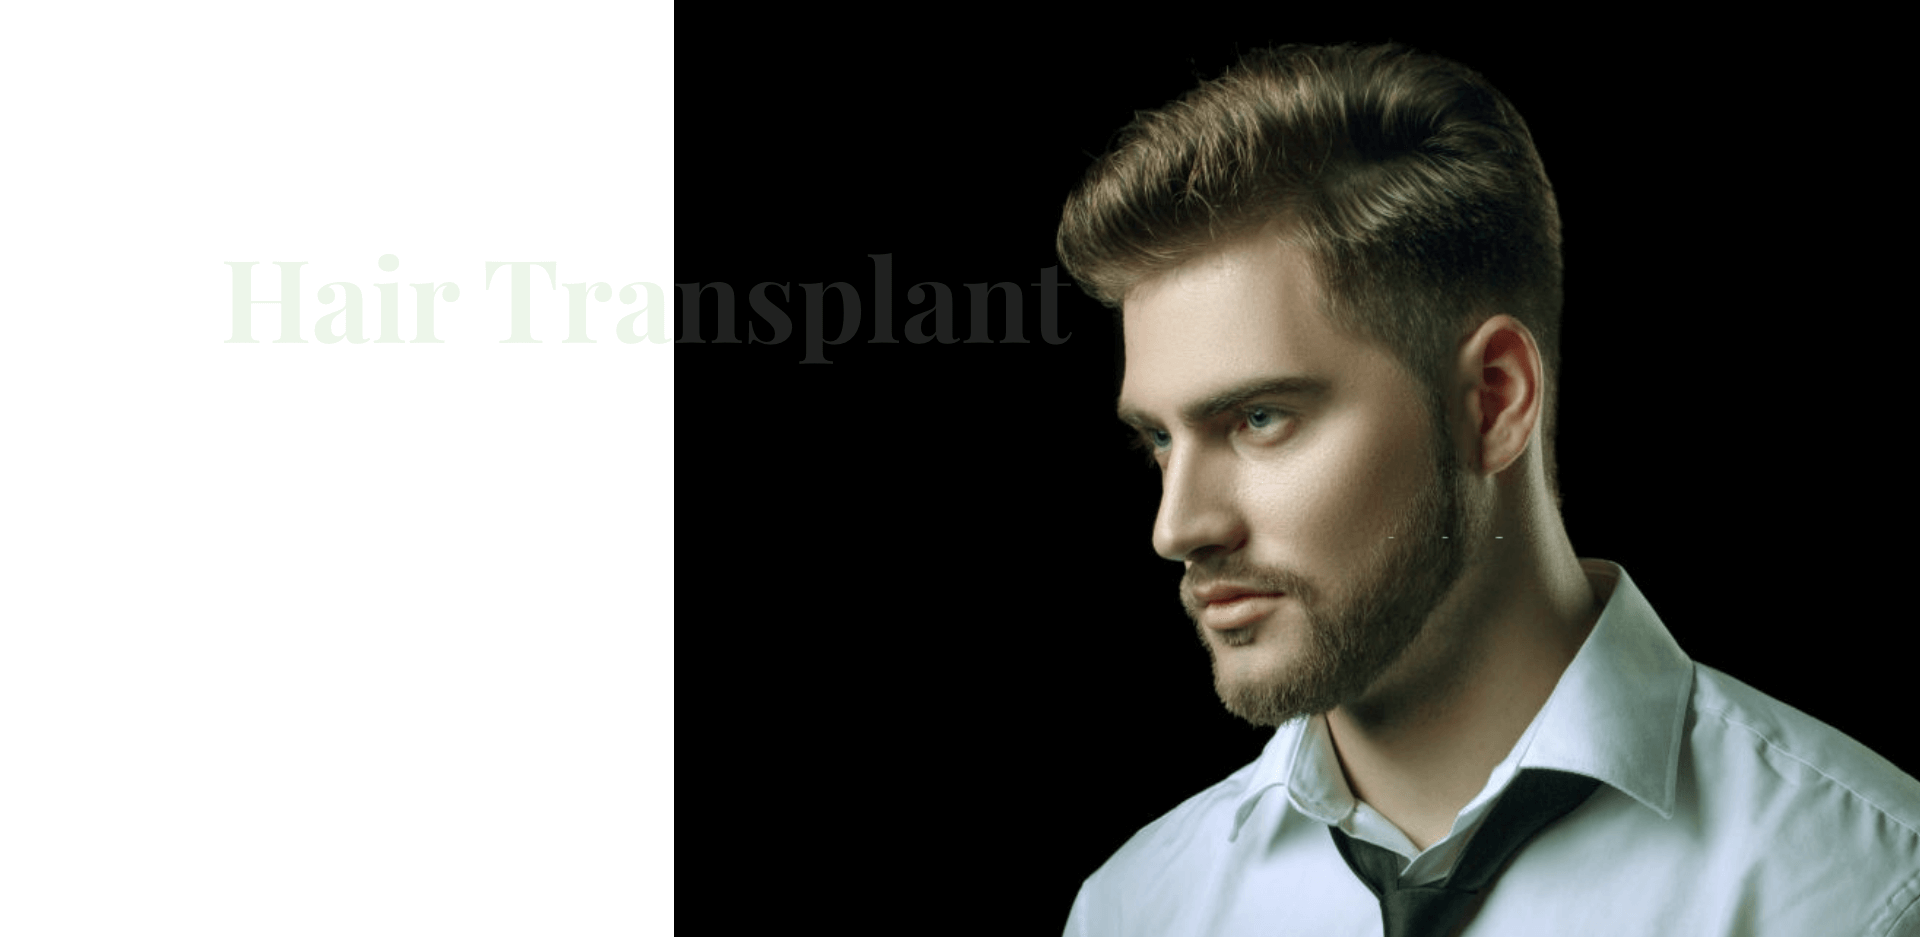 Natural Hair Line transplant